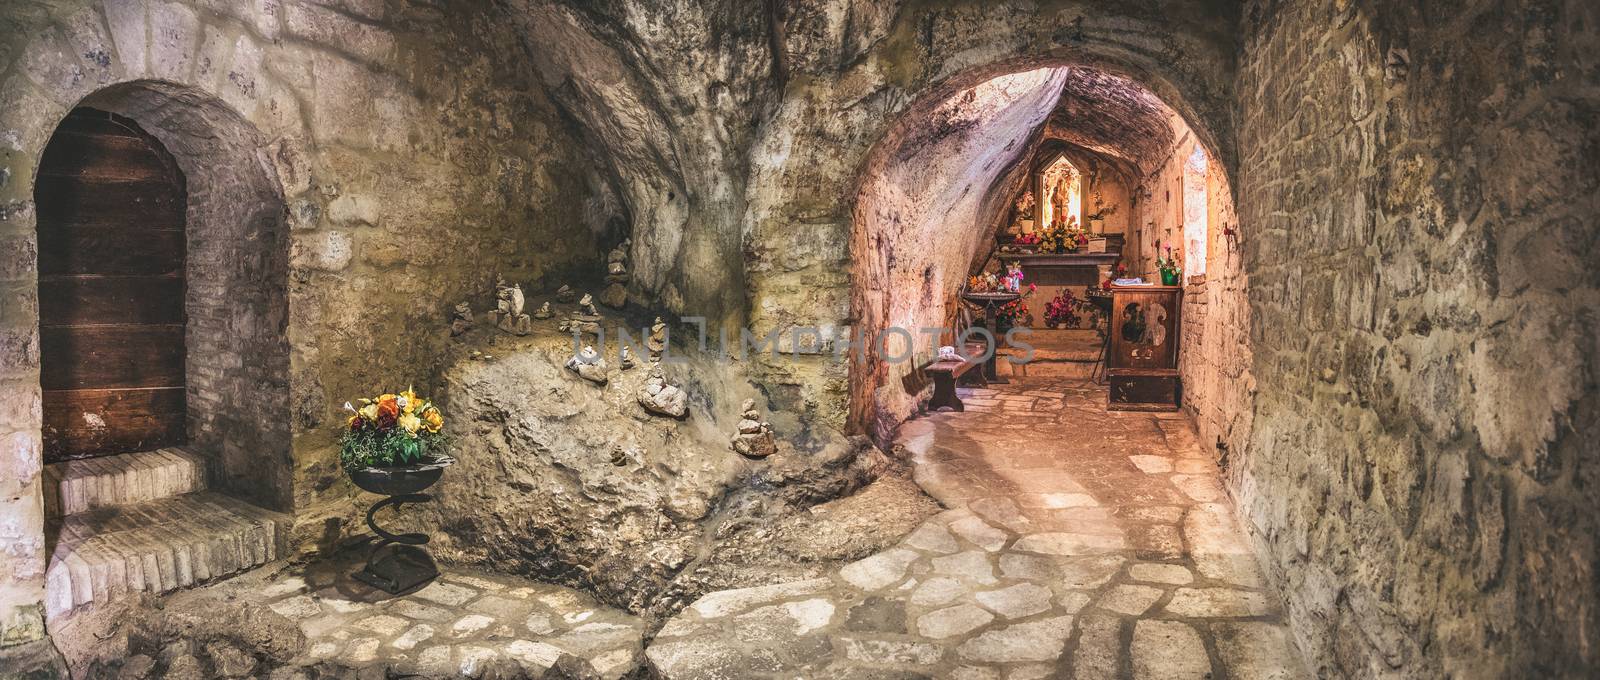 cavern church of Santa Maria Infra Saxa in the Frassassi and Valadier temple area - Marche region - Italy .